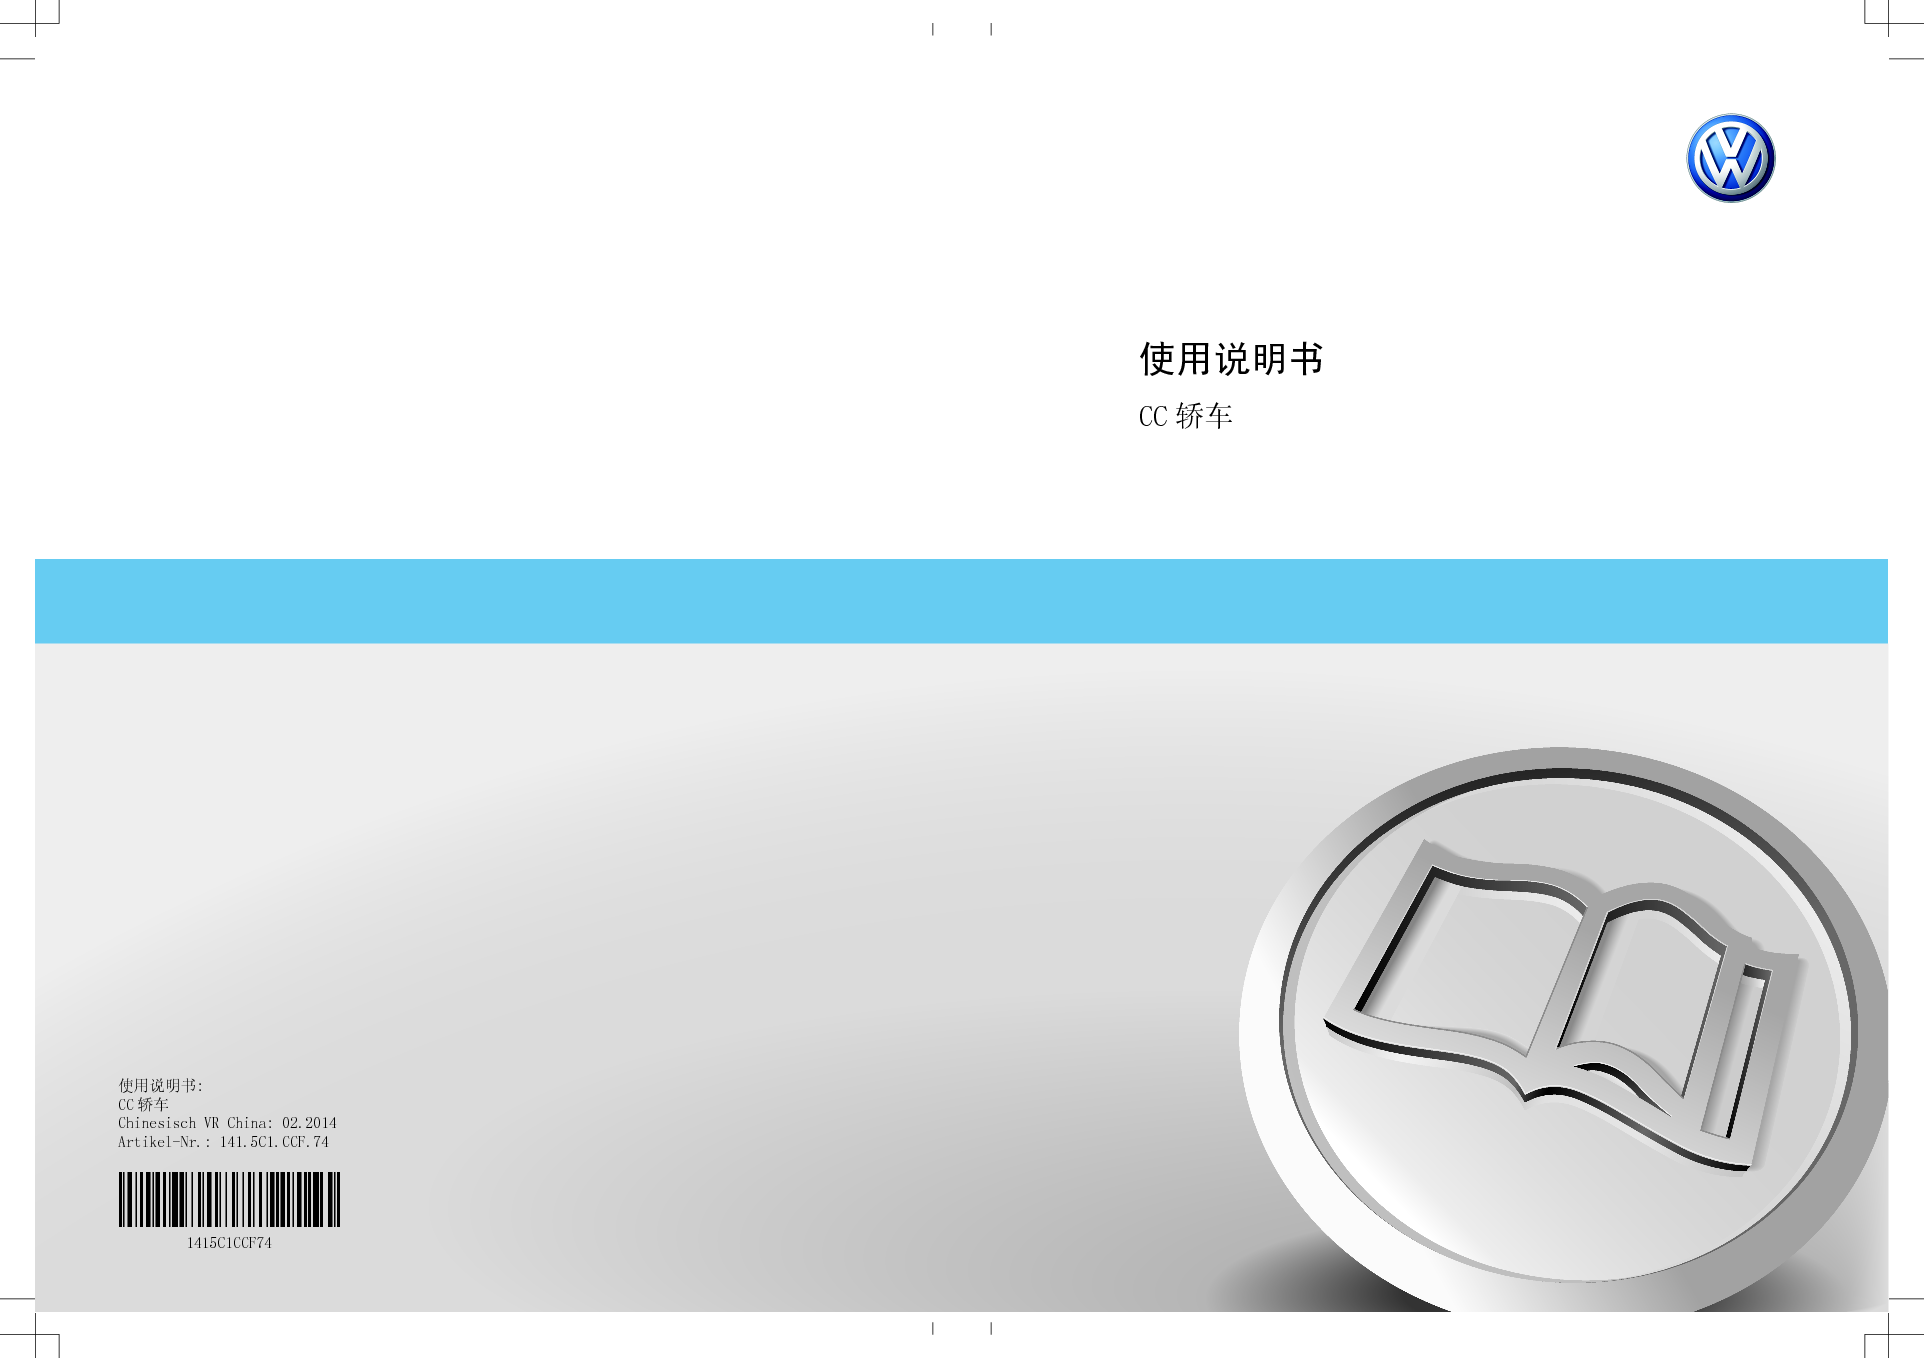 大众 Volkswagen CC 2014 用户手册 封面